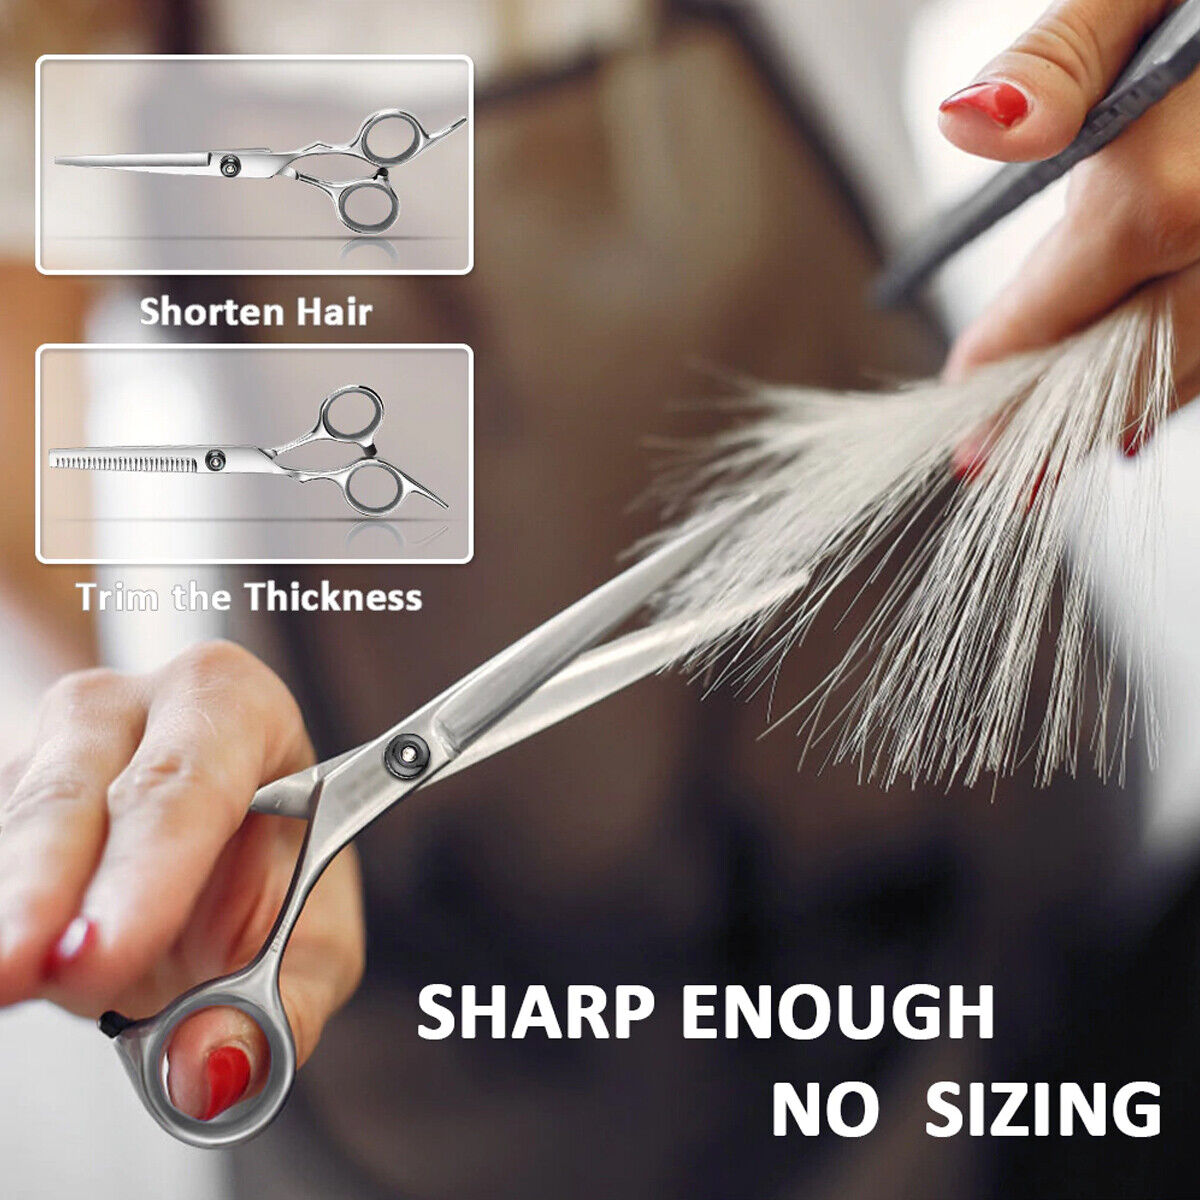 11pcs Hair Cutting Thinning Scissors Barber Shears Hairdressing Salon Set